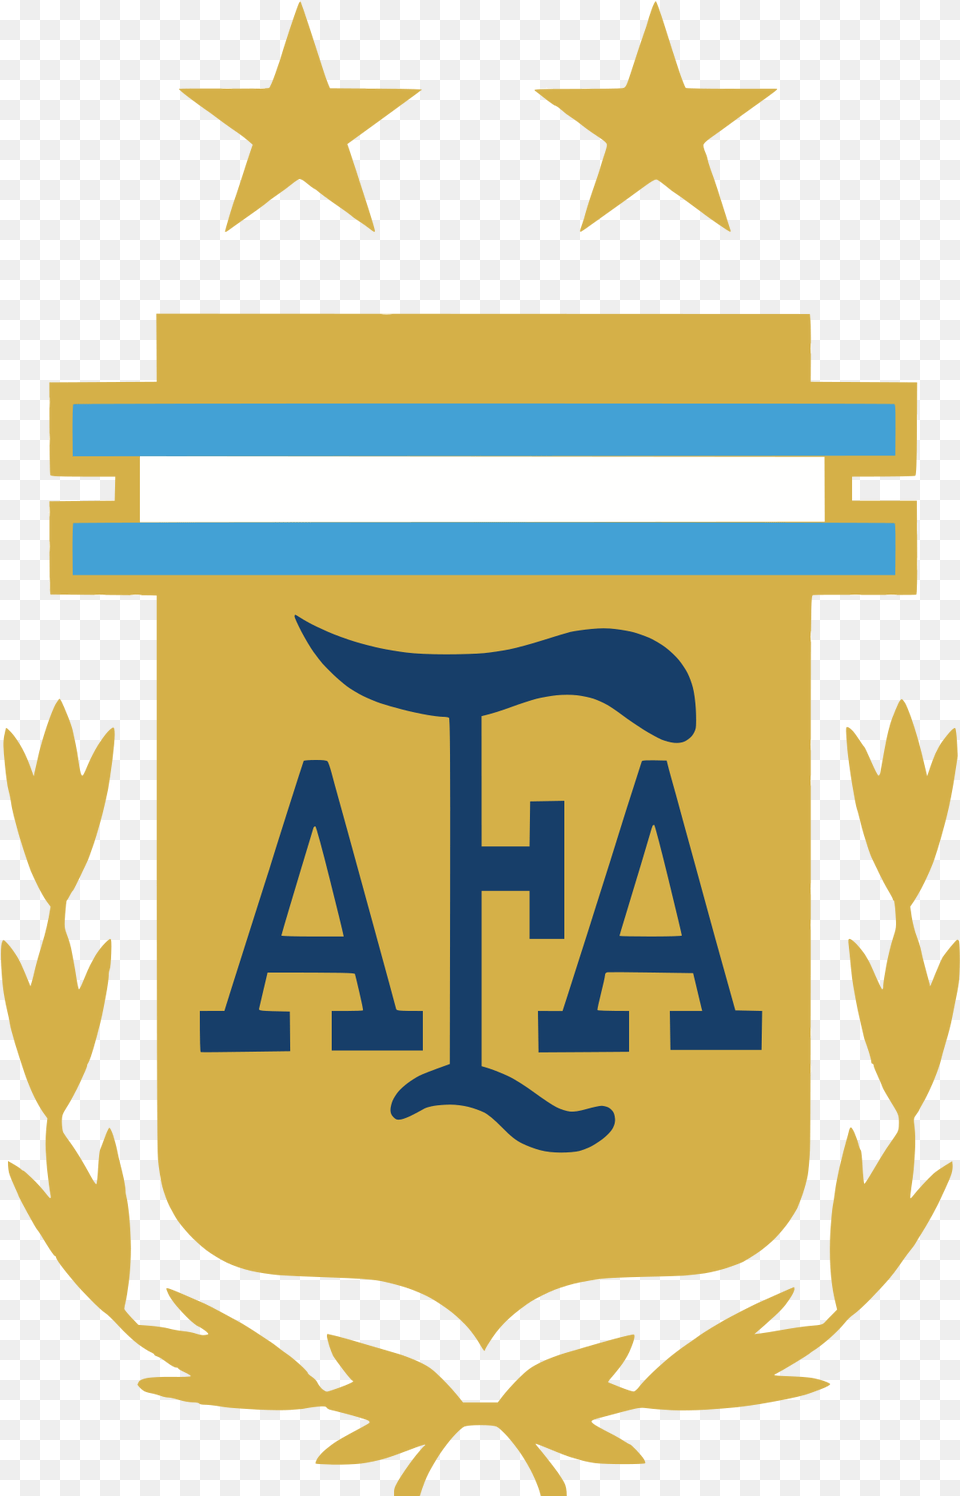 Argentina National Football Team Wikipedia Argentina National Football Team Logo, Emblem, Symbol Png